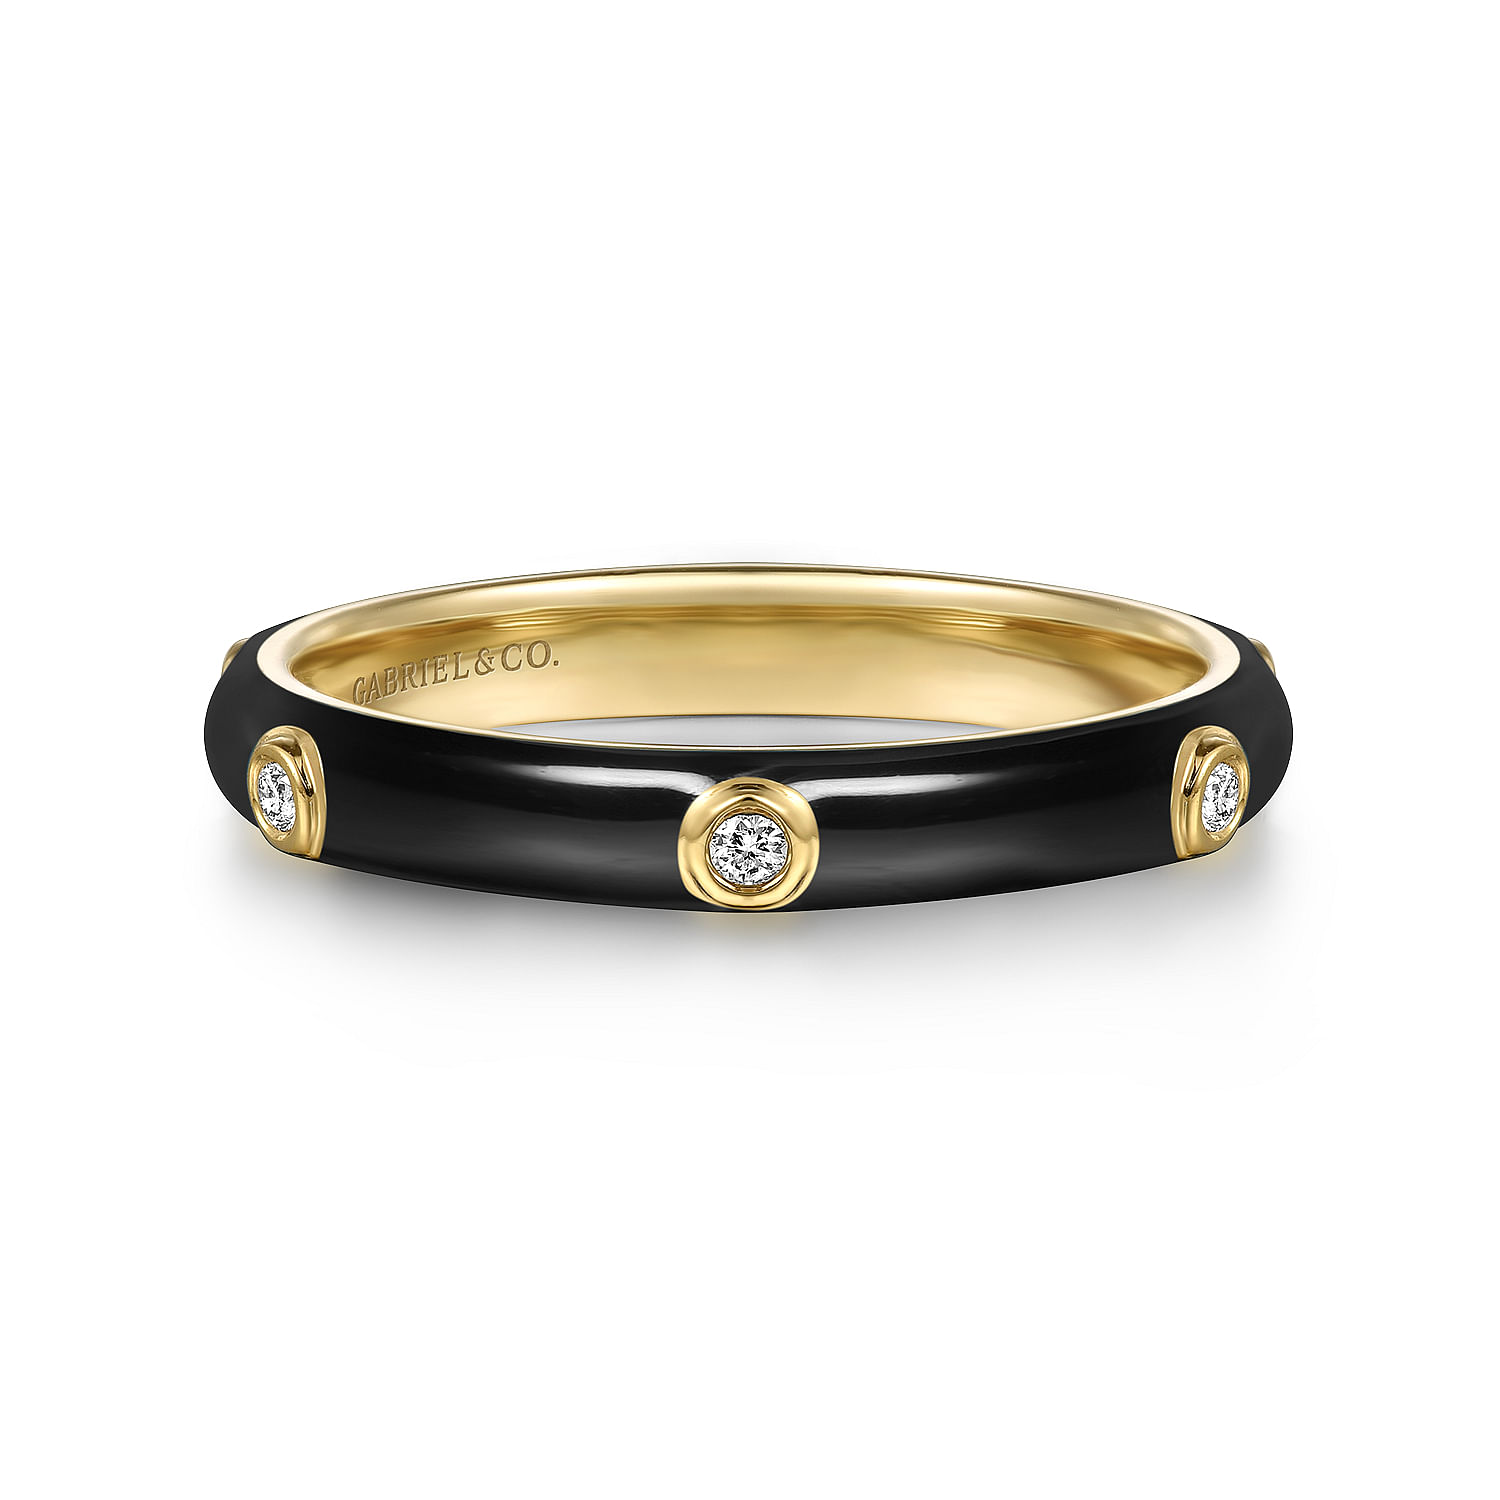 Gabriel & Co. 14K Yellow Gold Diamond and Black Enamel Ring